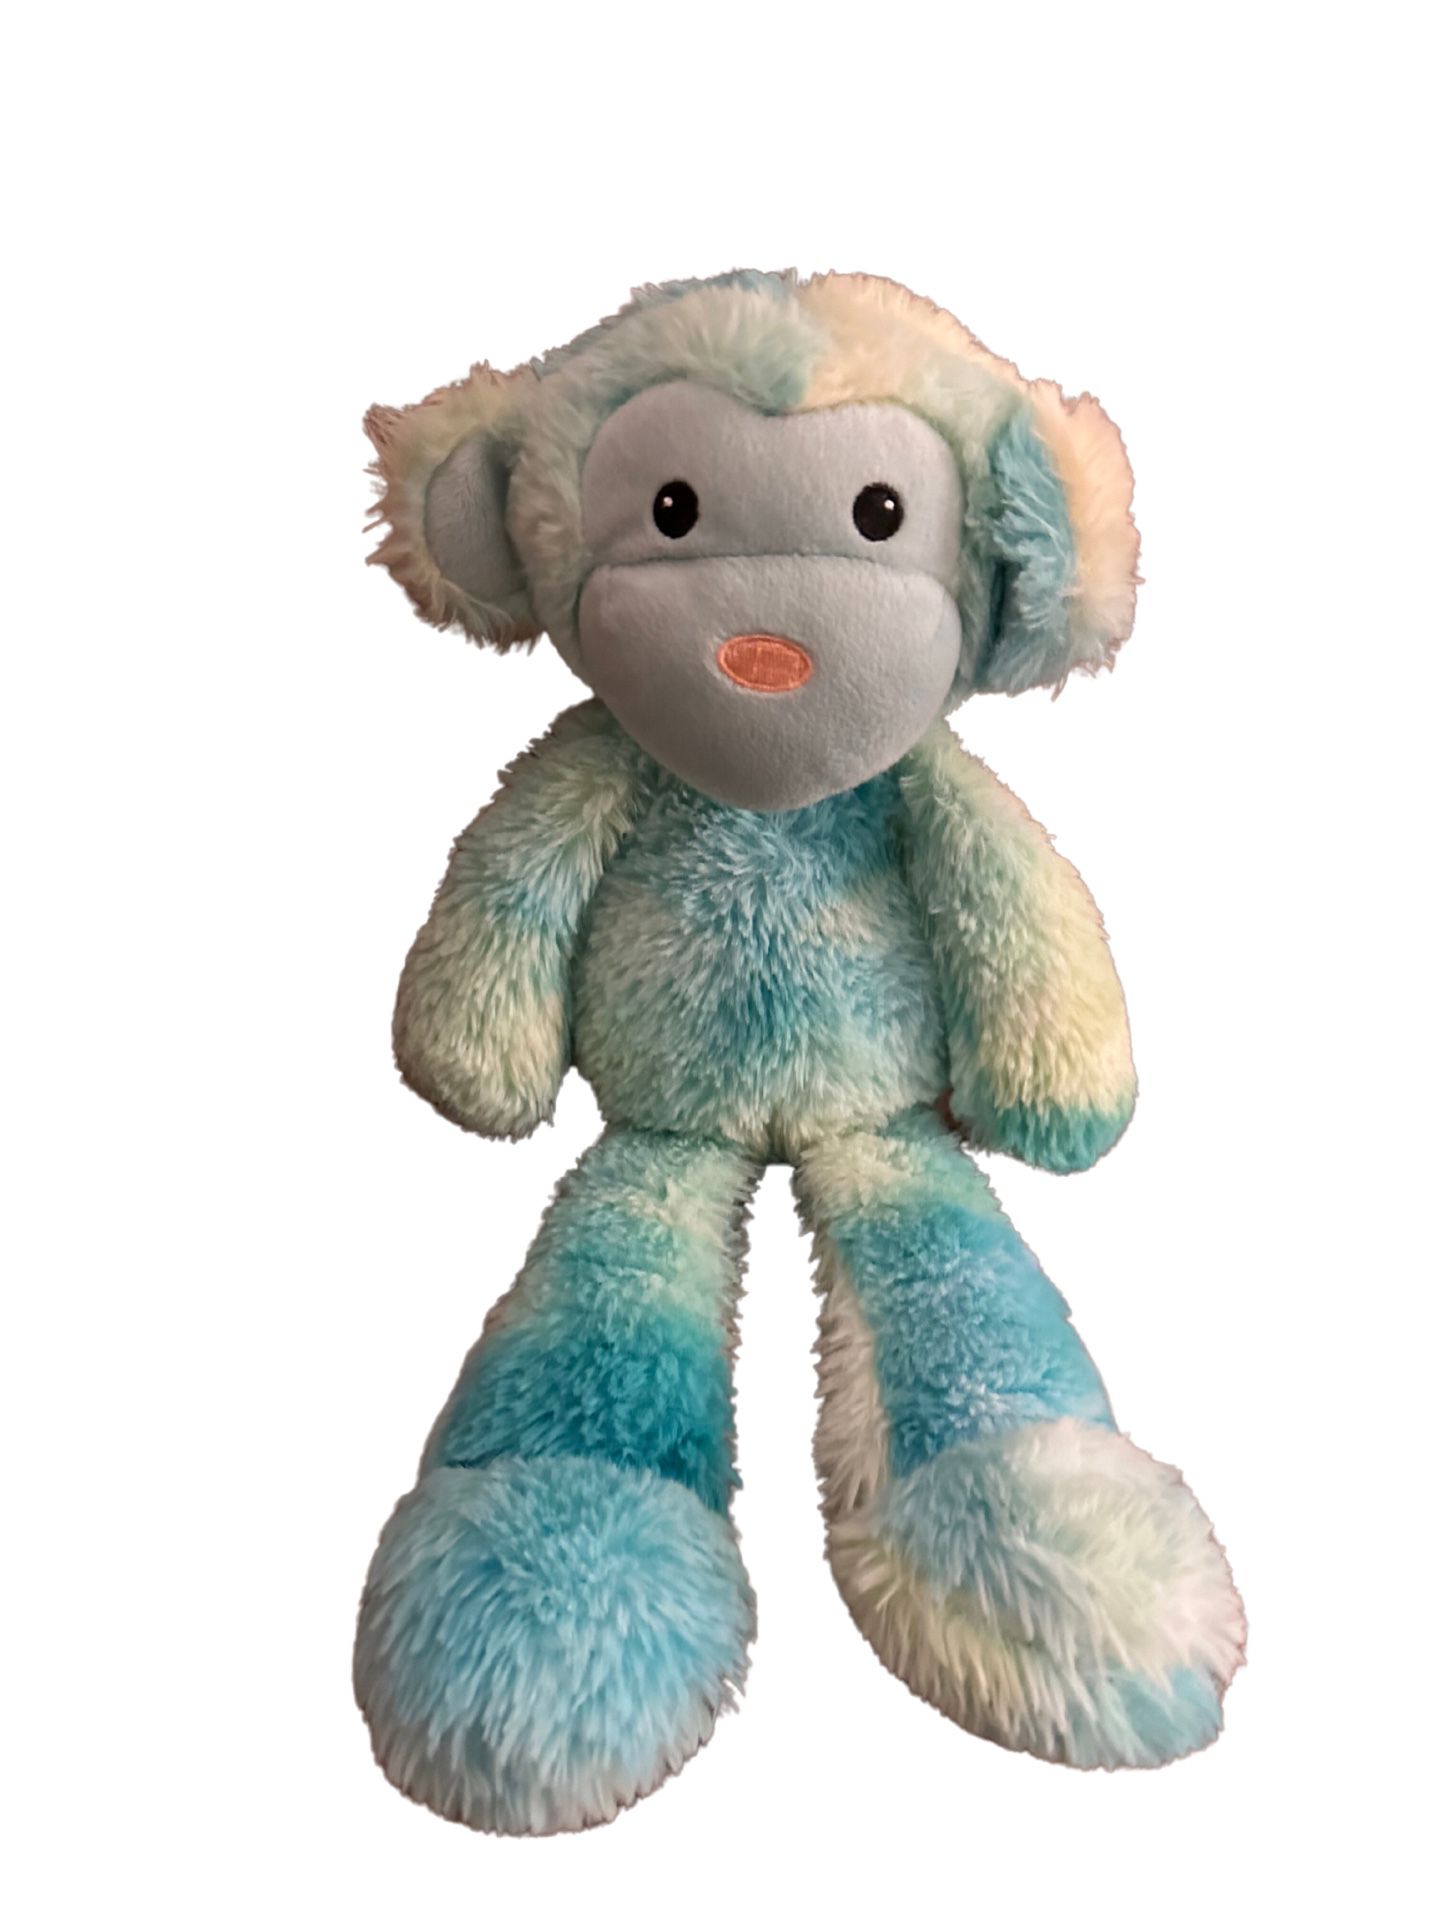 VGUC-14” Manhattan Toy Monkey Stuffed Animal Plush Blue And Green Swirl Tie Dye